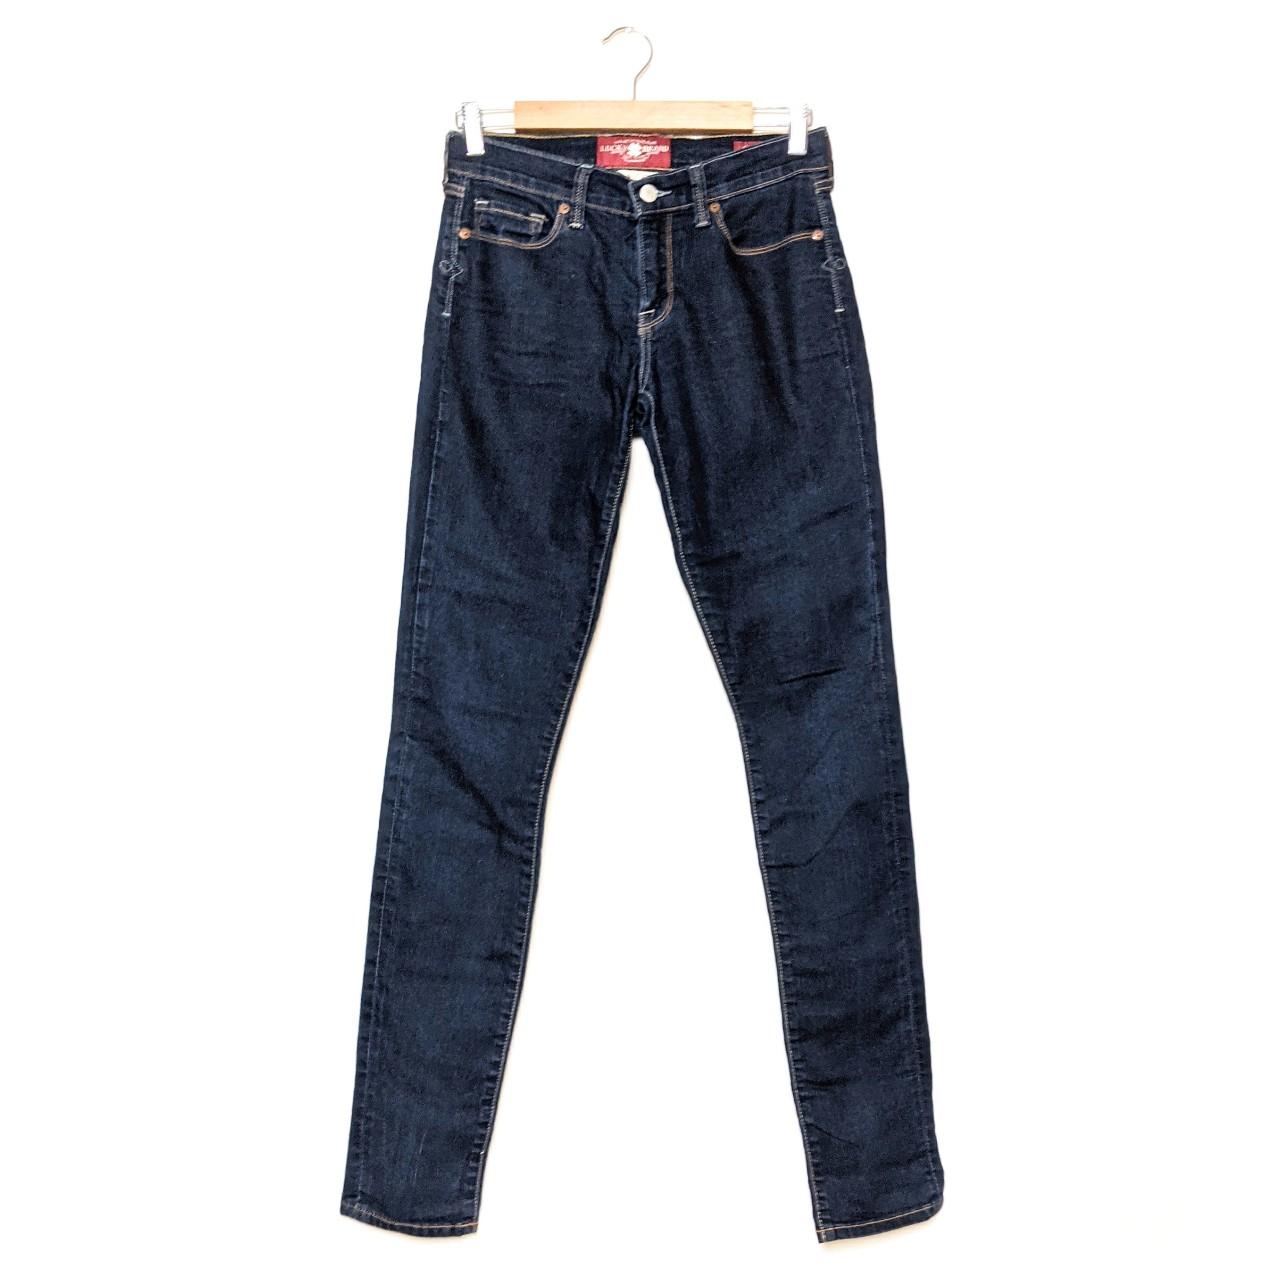 lucky brand sofia skinny jeans feature a dark wash... - Depop